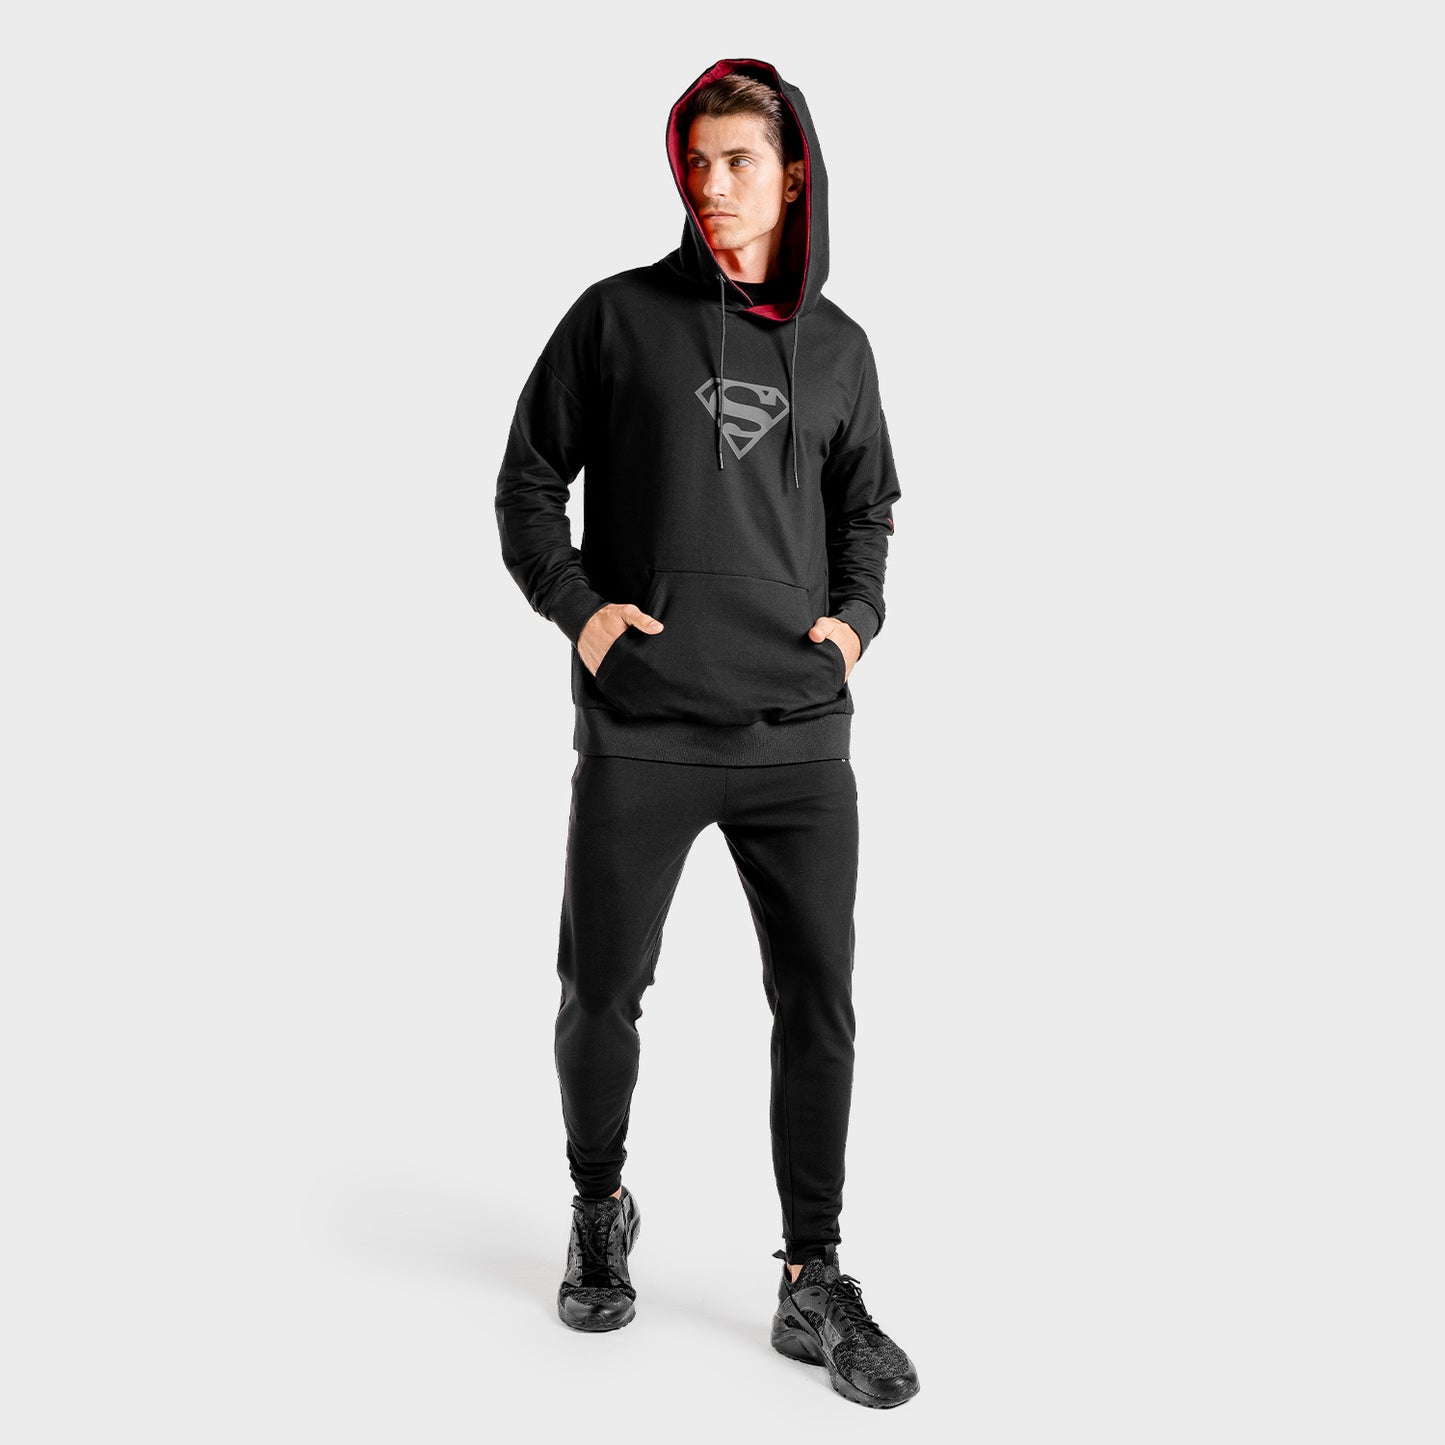 squatwolf-workout-hoodies-for-men-superman-gym-hoodie-black-gym-wear